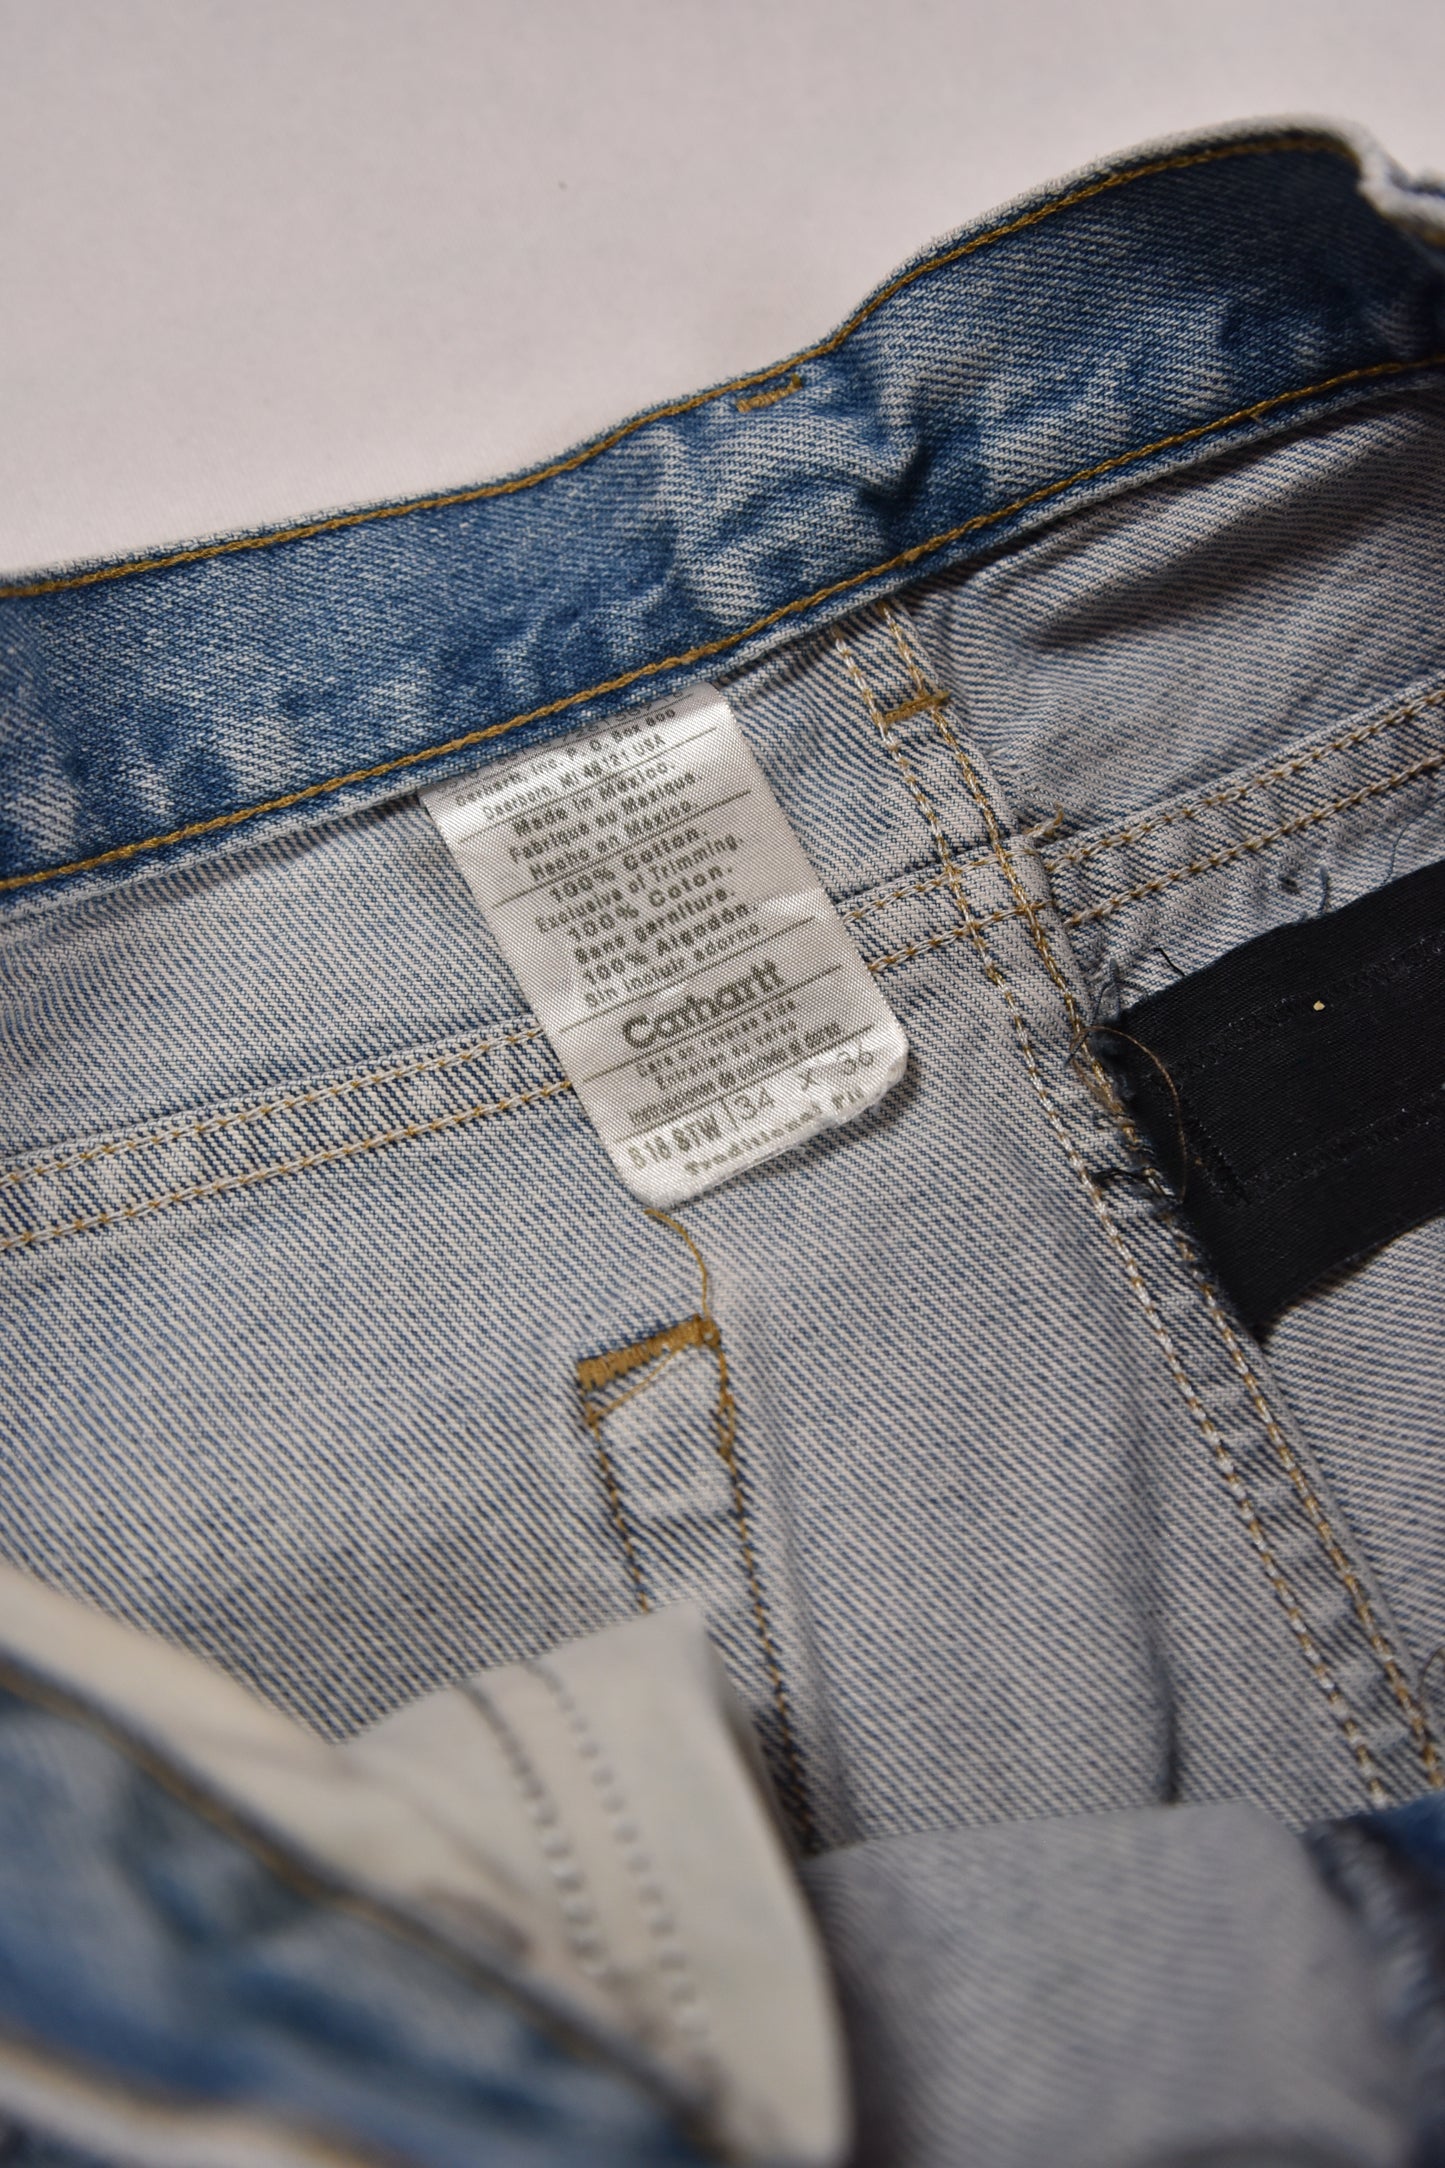 Jeans Carhartt Vintage / 34x36